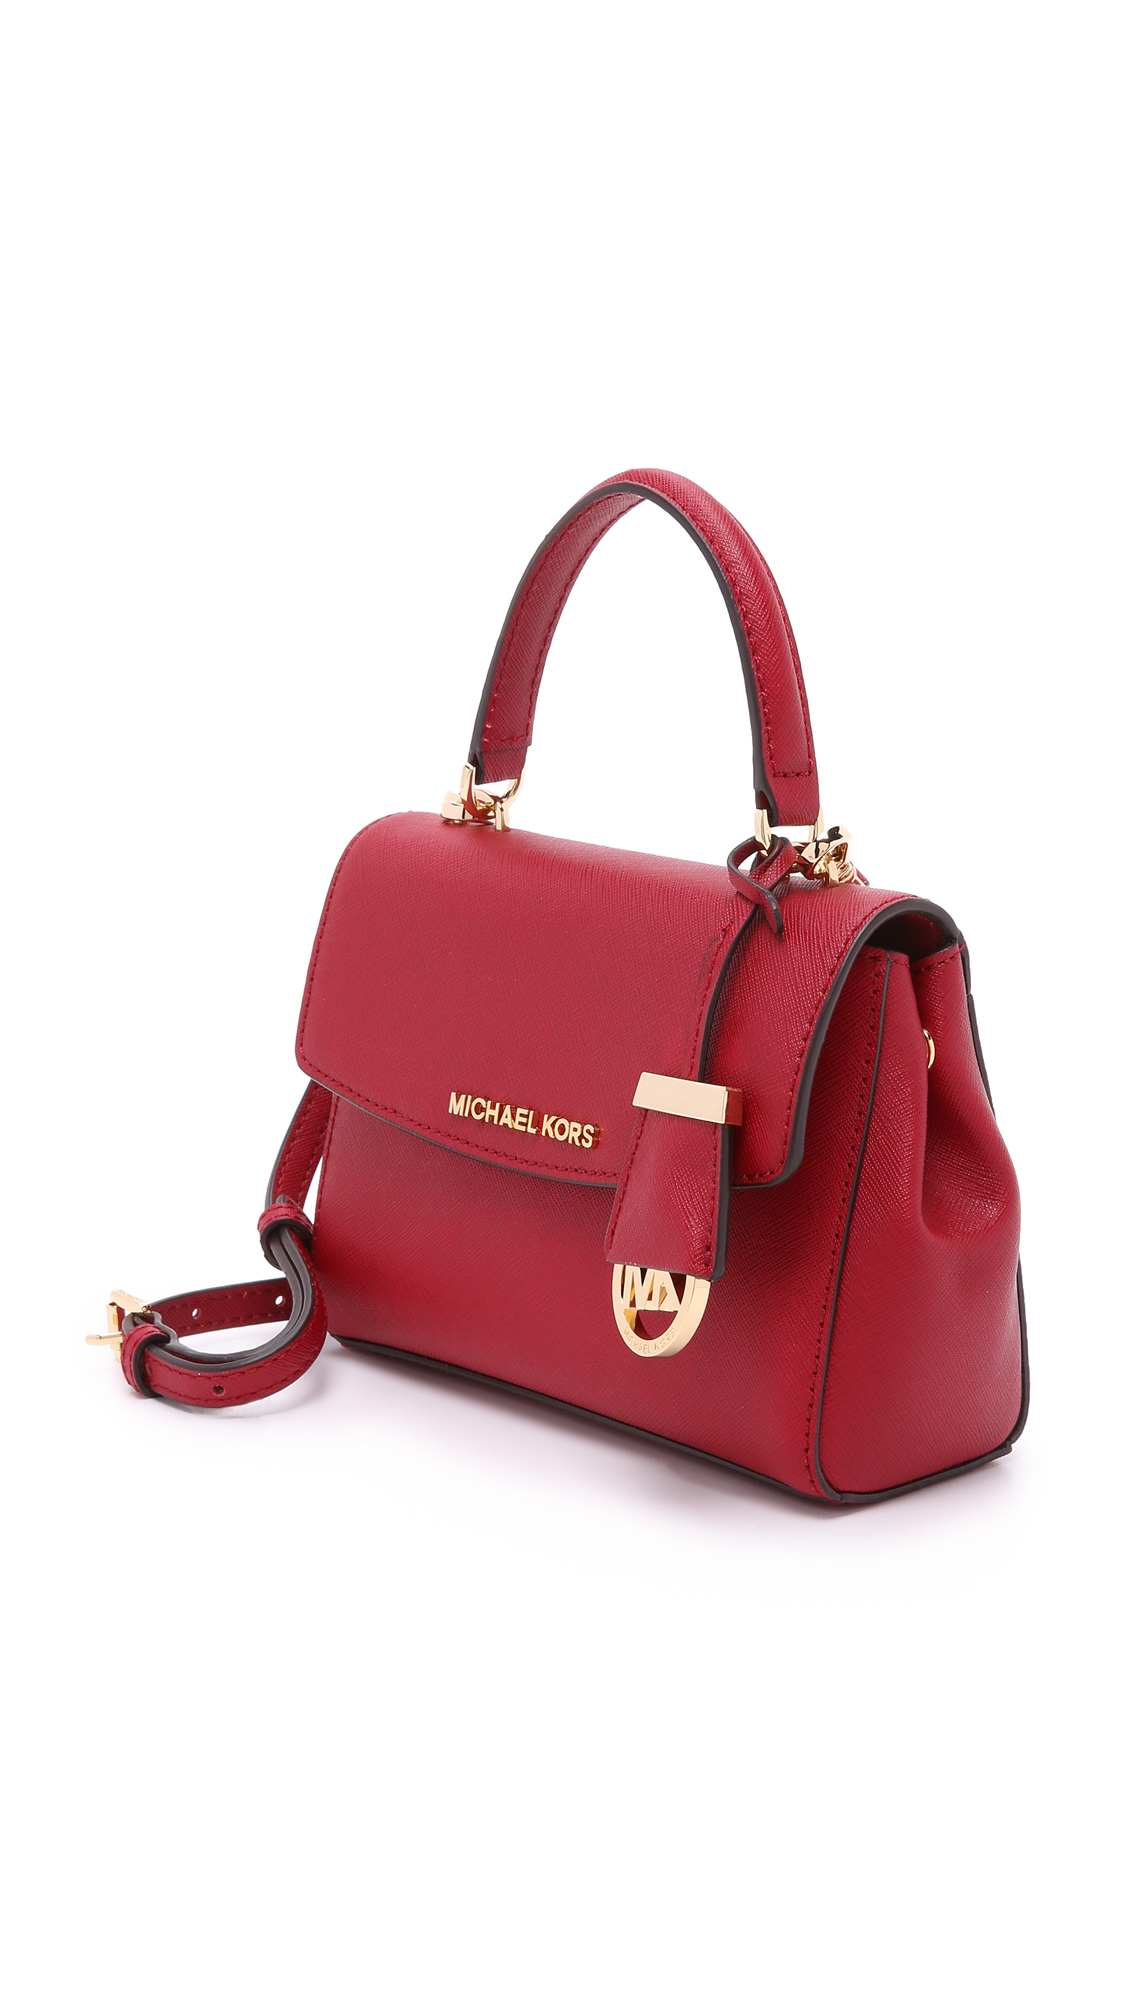 NWT Michael Kors Ava Extra Small Saffiano Leather Crossbody Bag Sangria Red